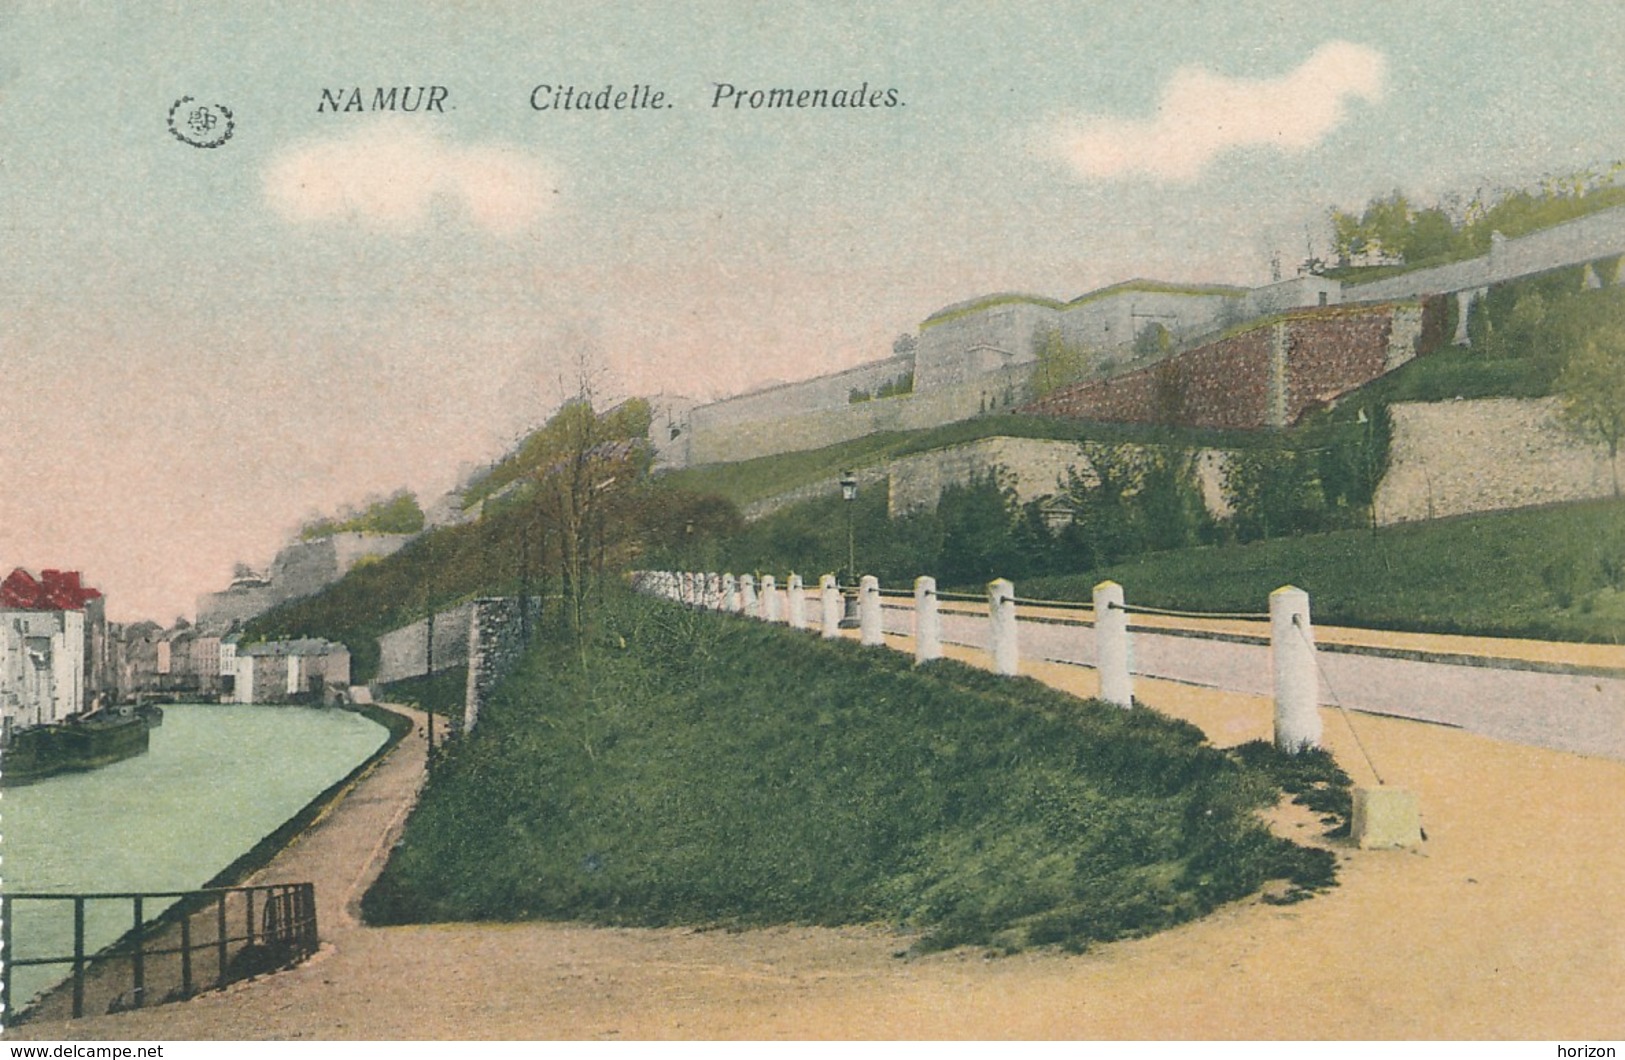 XB.156.  Namur - Citadelle - Promenades - Namen